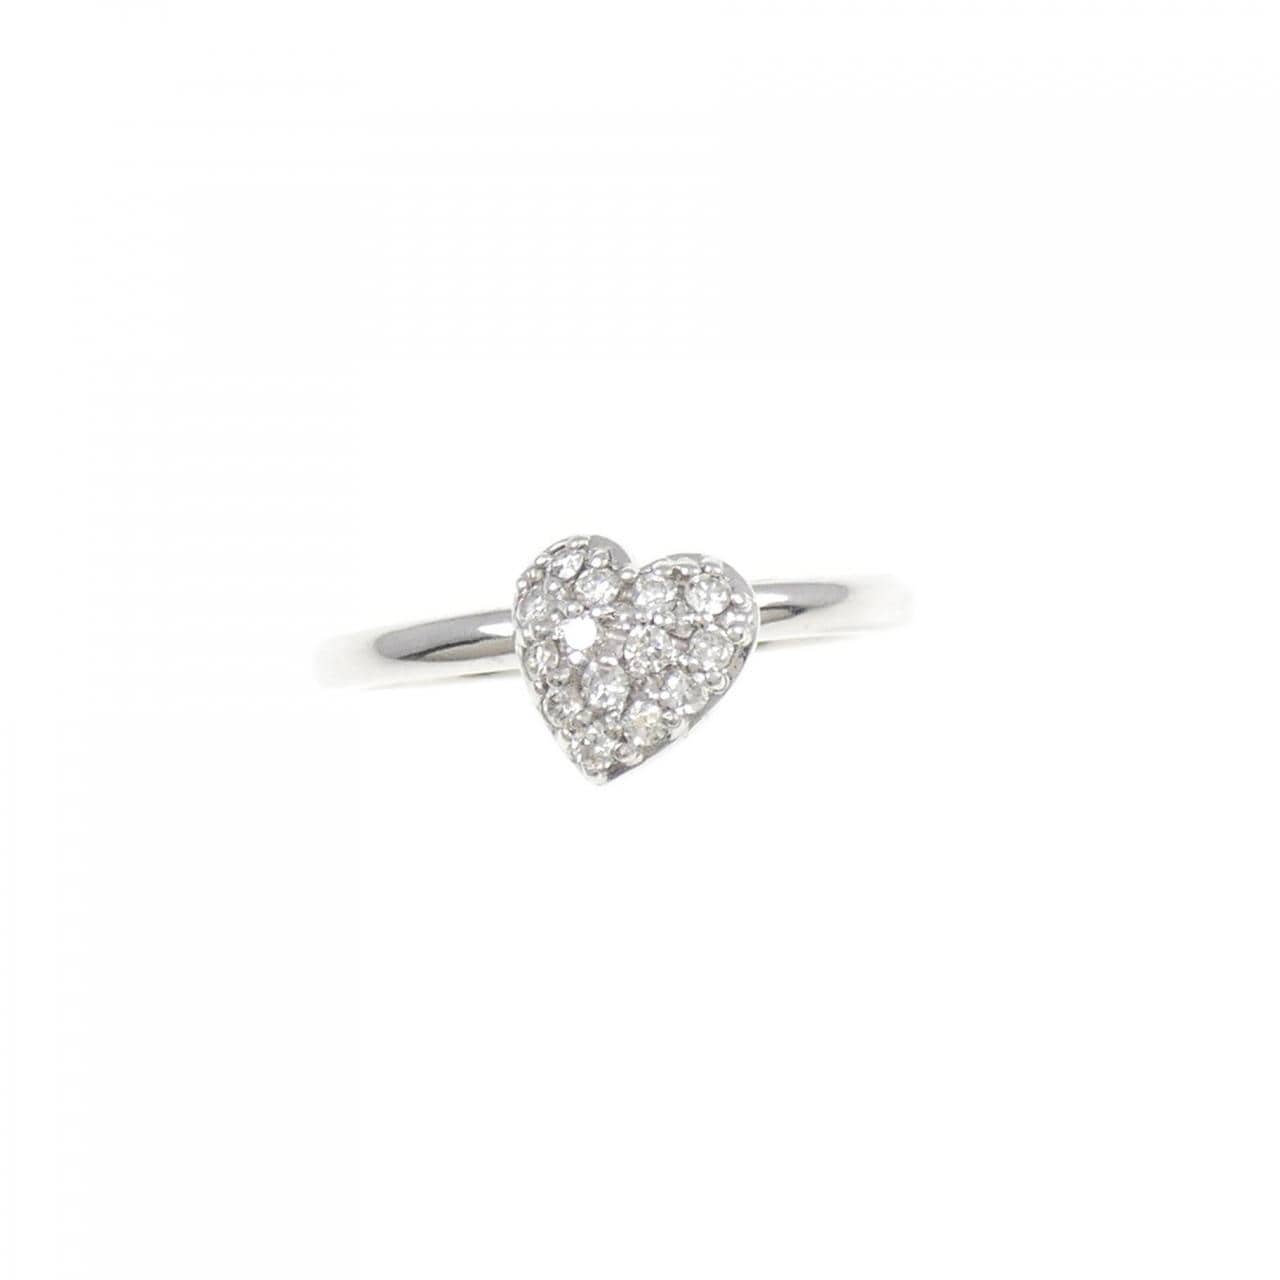 K18WG heart Diamond ring 0.15CT